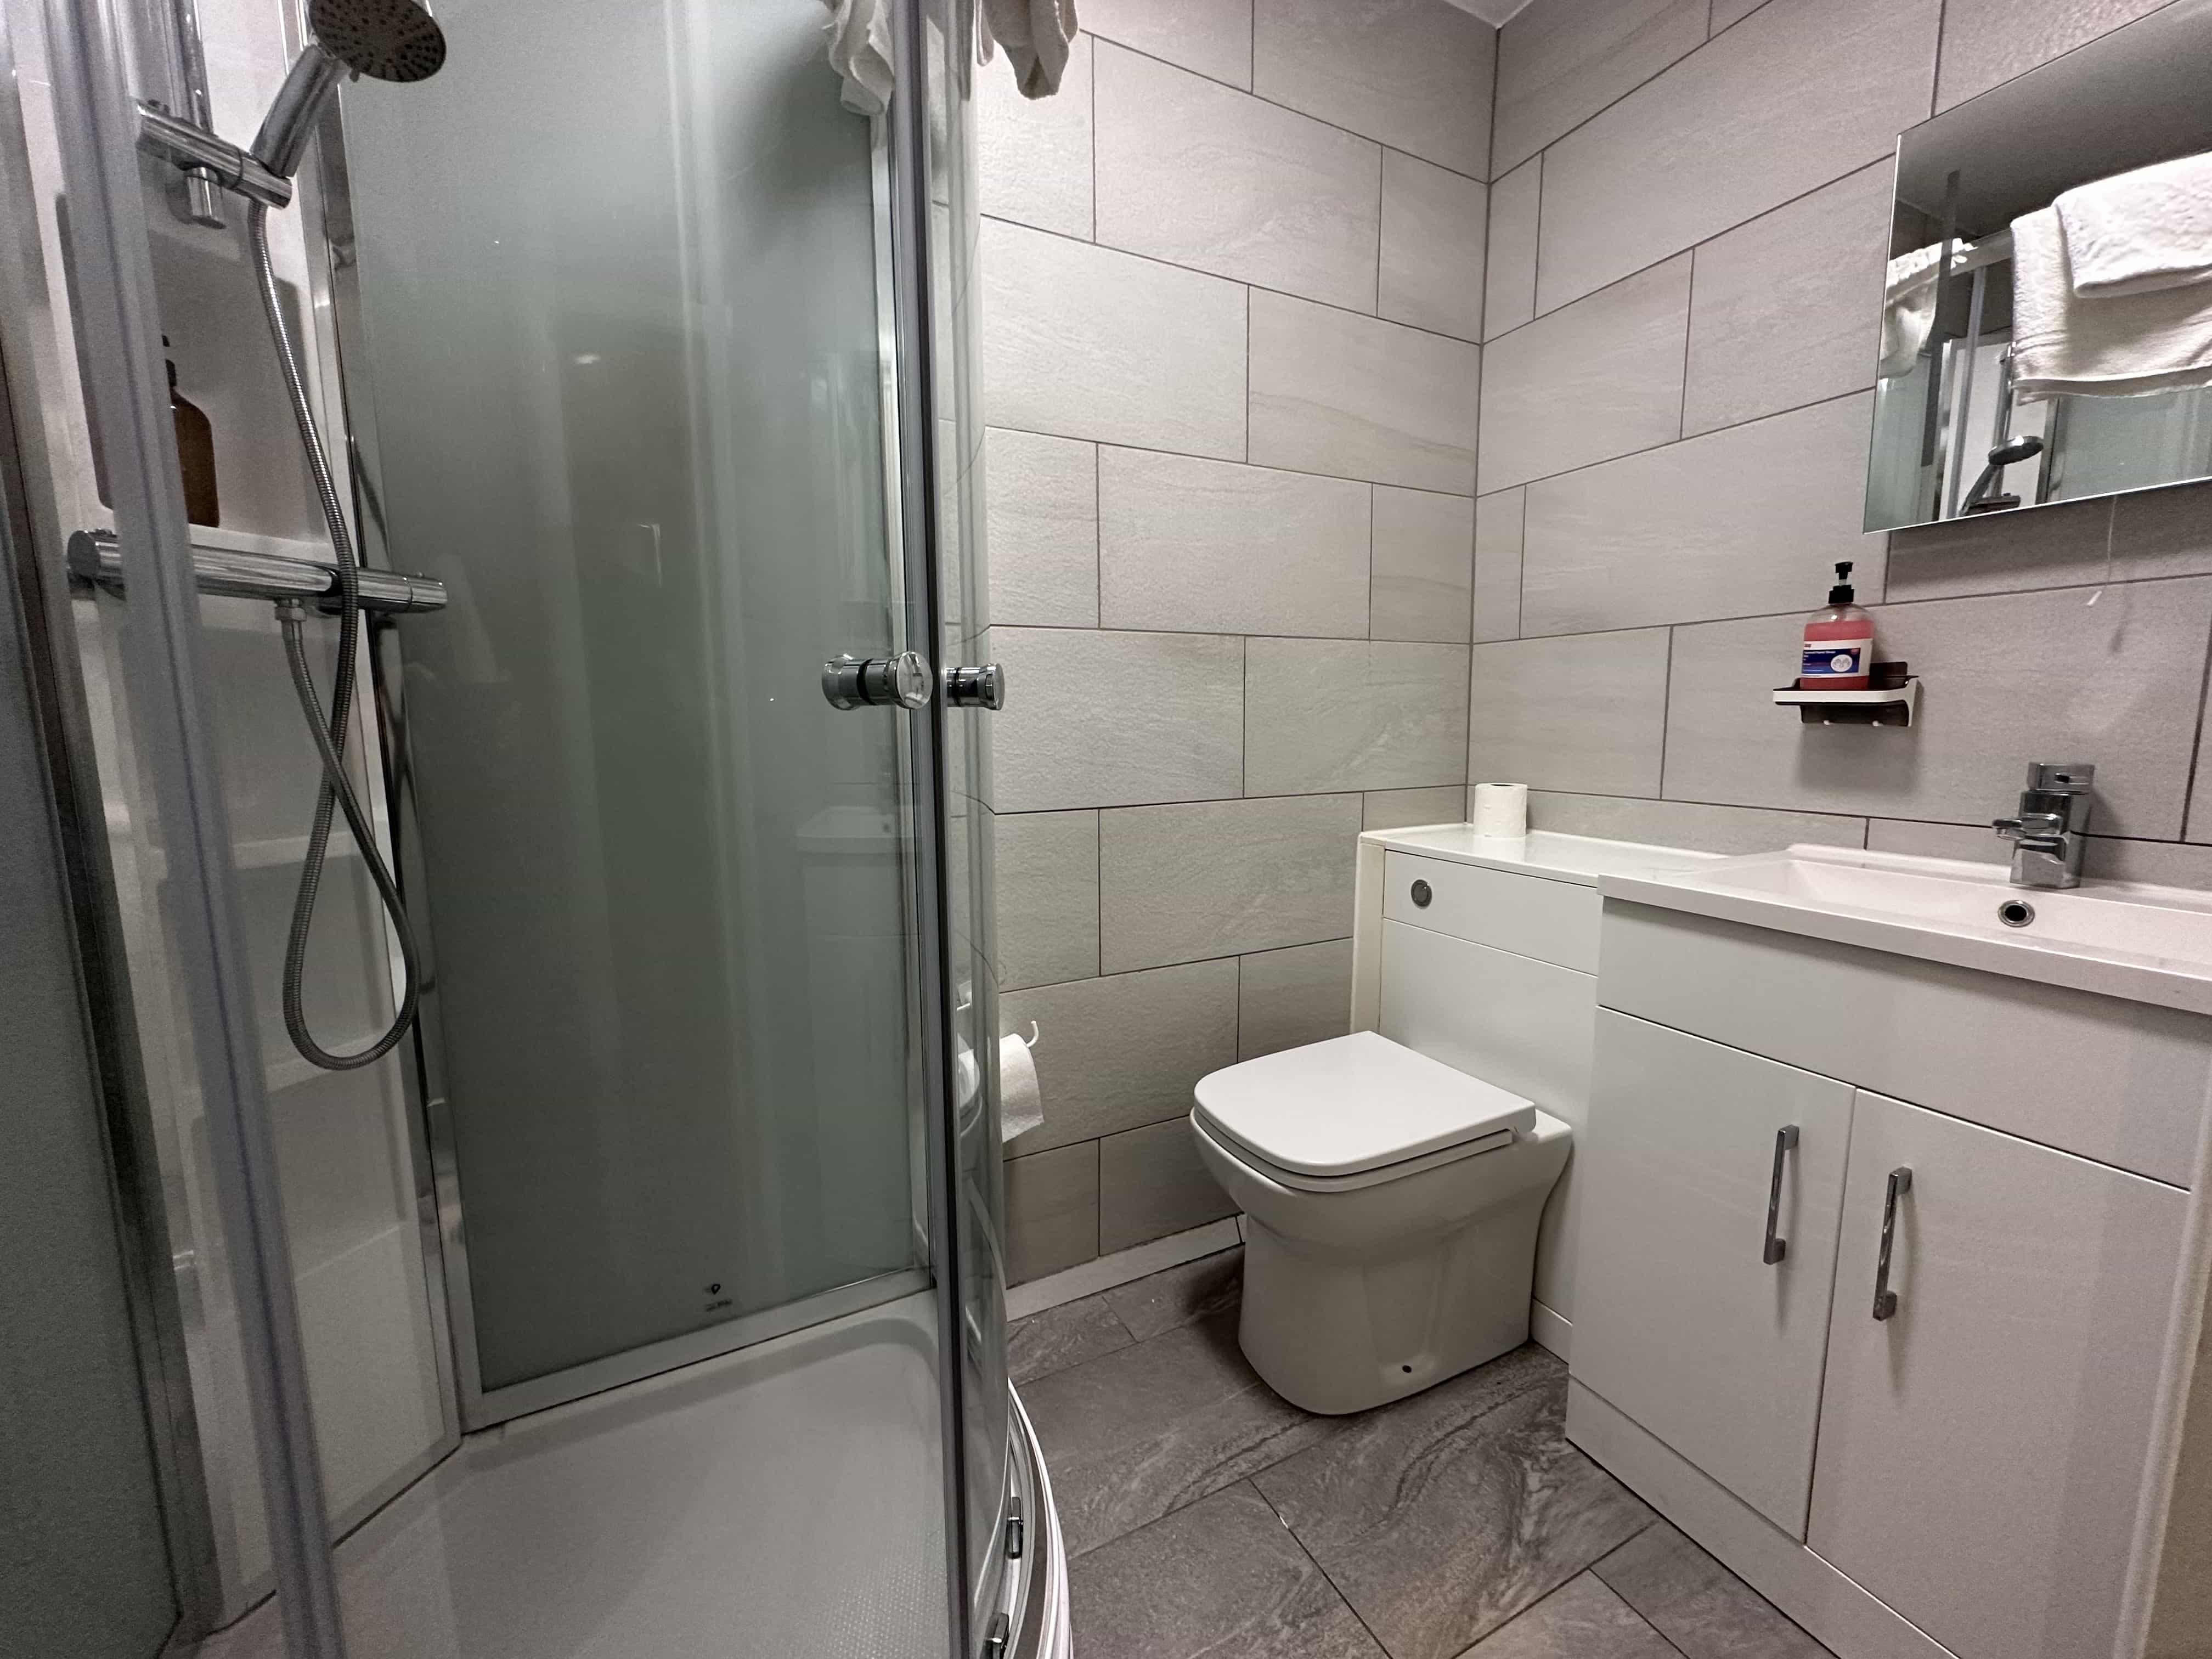 A modern bathroom with a corner shower, toilet, sink unit